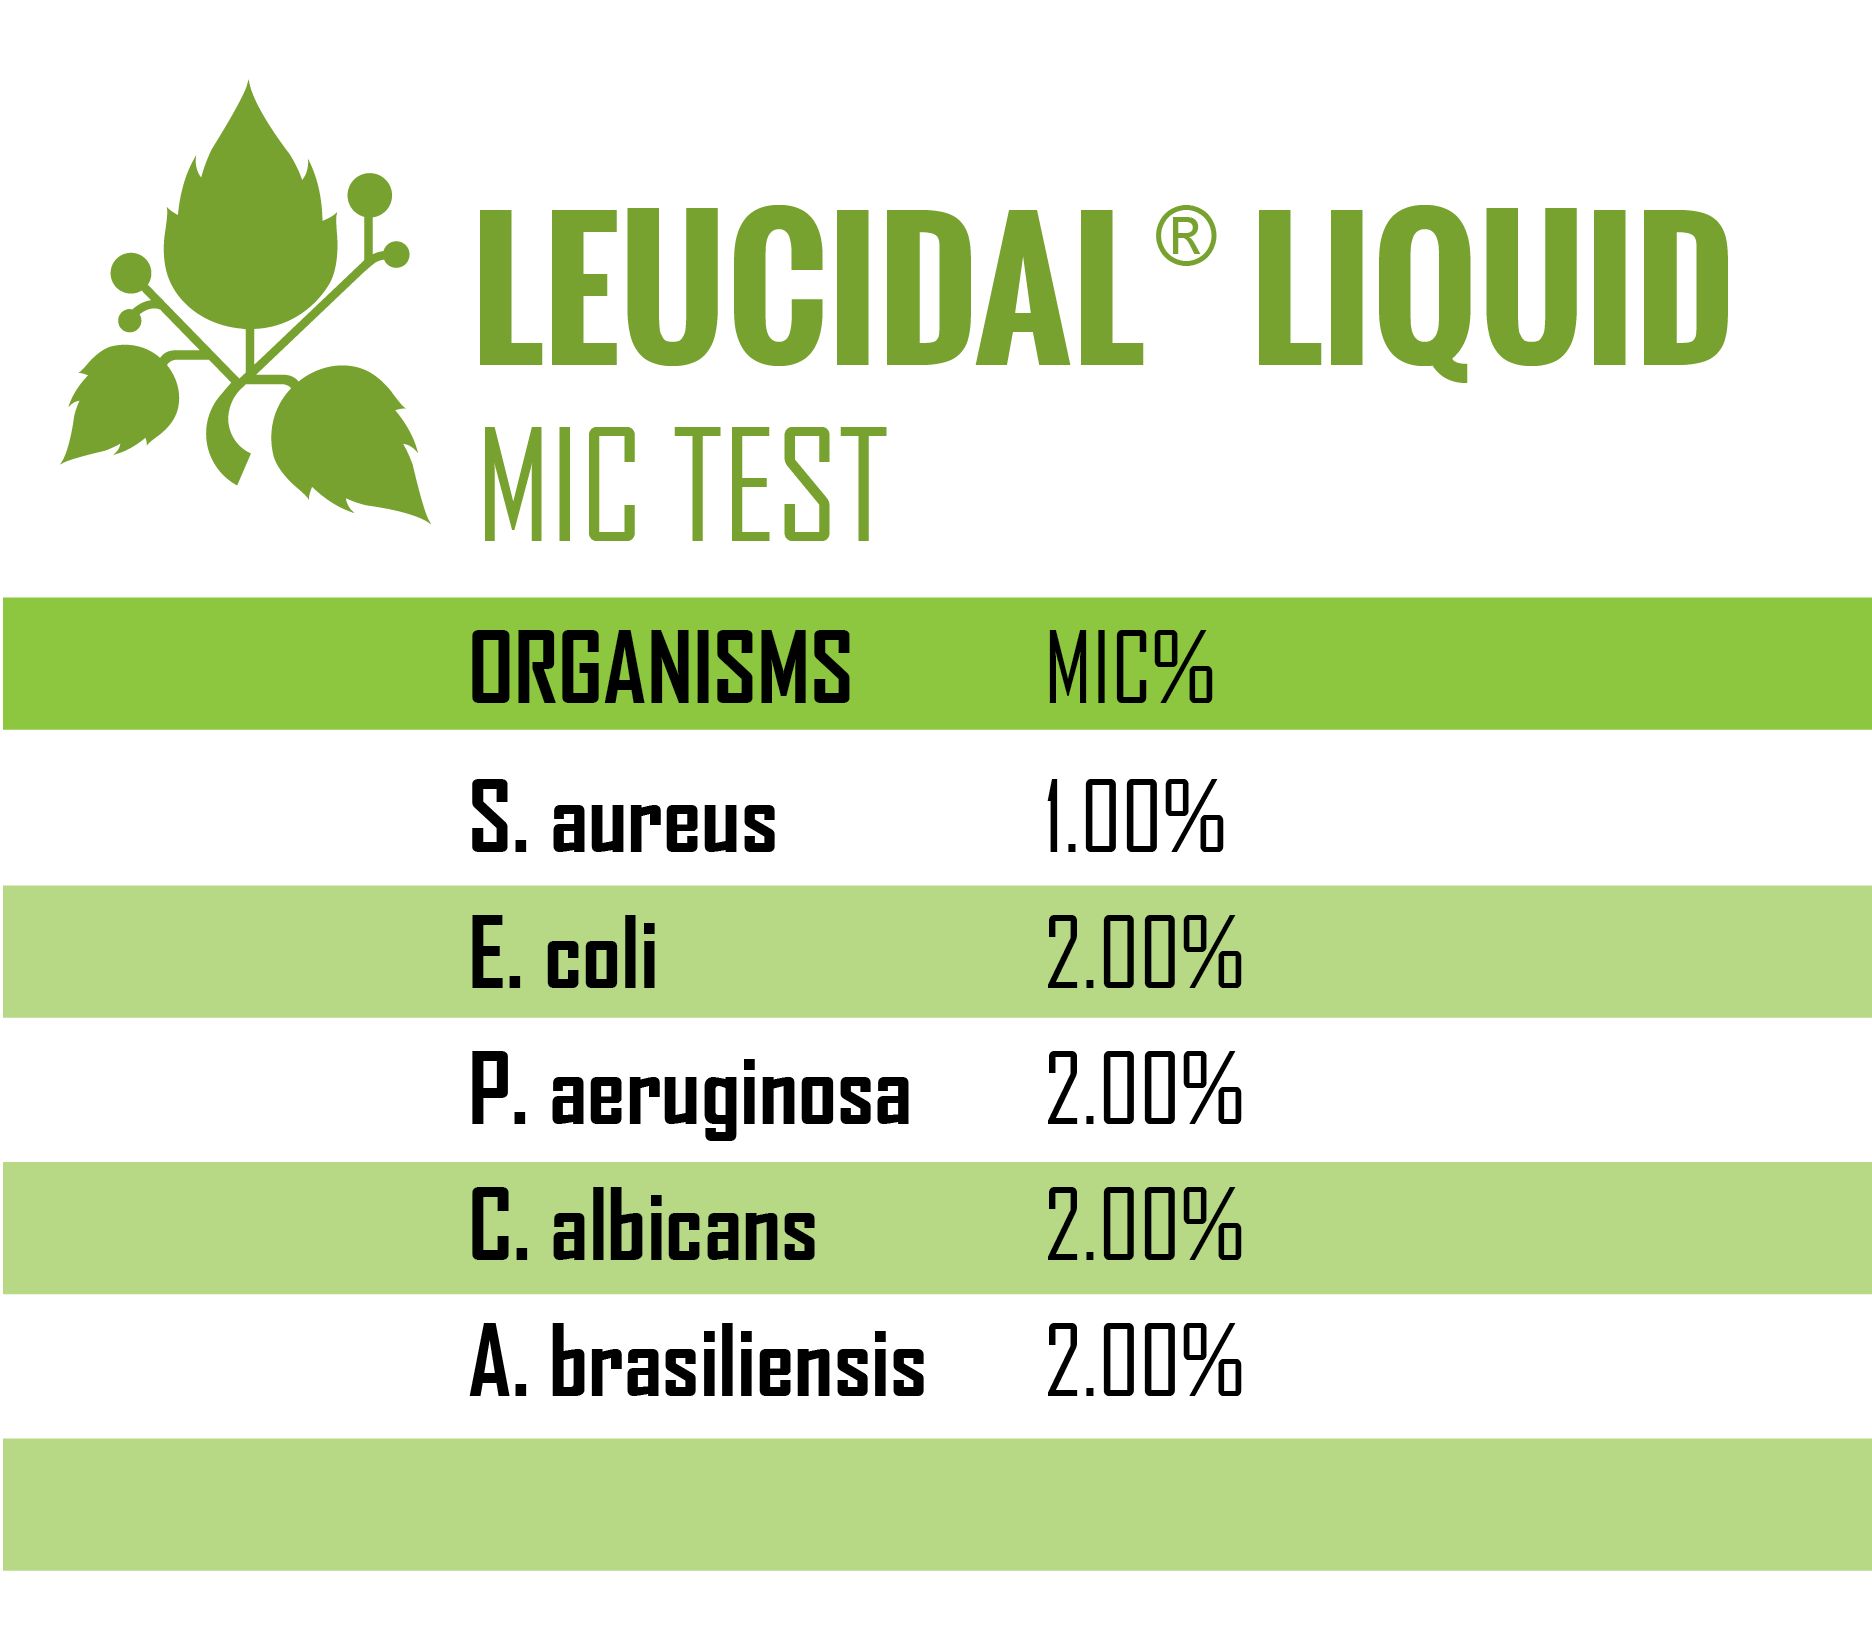 M15008-Leucdial Liquid-MIC Test-v1-01 - Active Micro Technologies